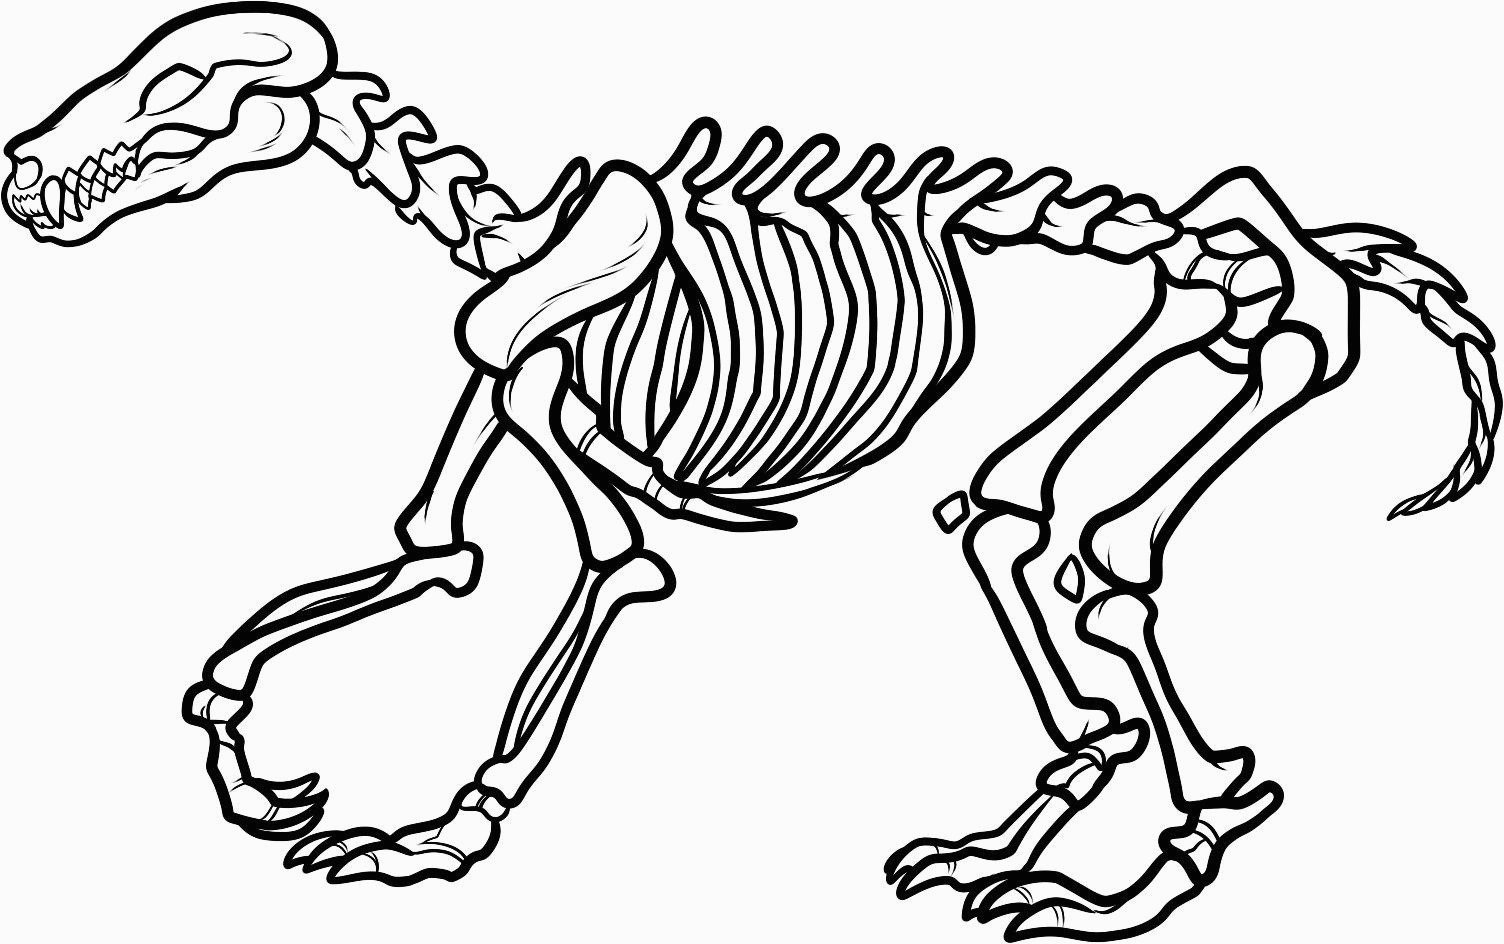 Dinosaur Skeleton Coloring Pages | Printable Coloring Pages - Free Printable Skeleton Coloring Pages